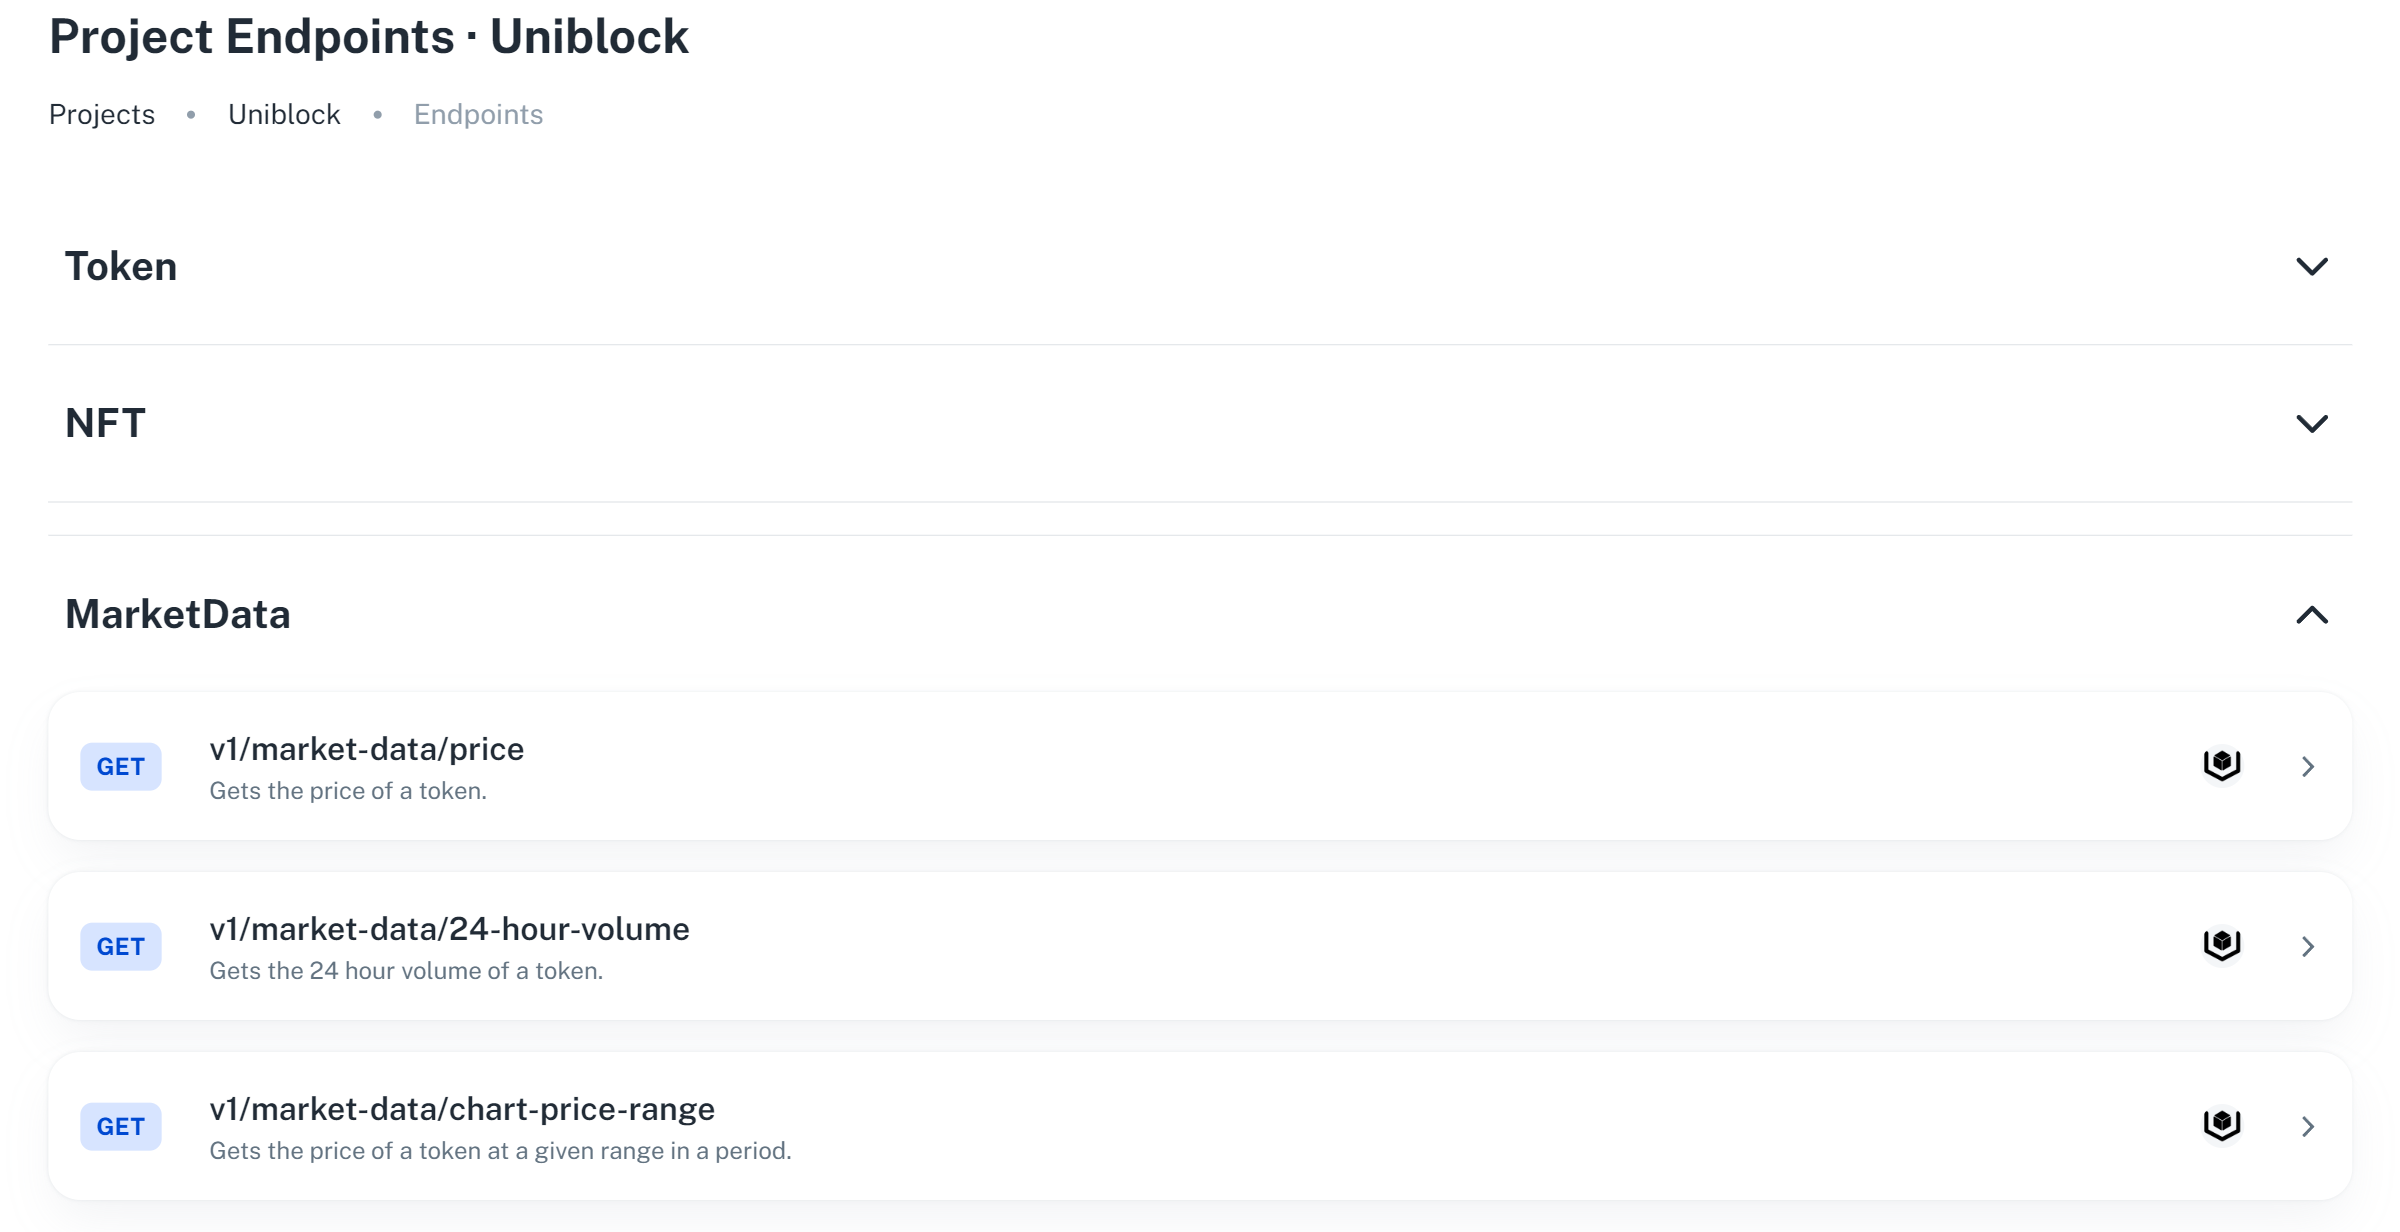 Uniblock Dashboard Endpoints with Token, NFT, MarketData categories.